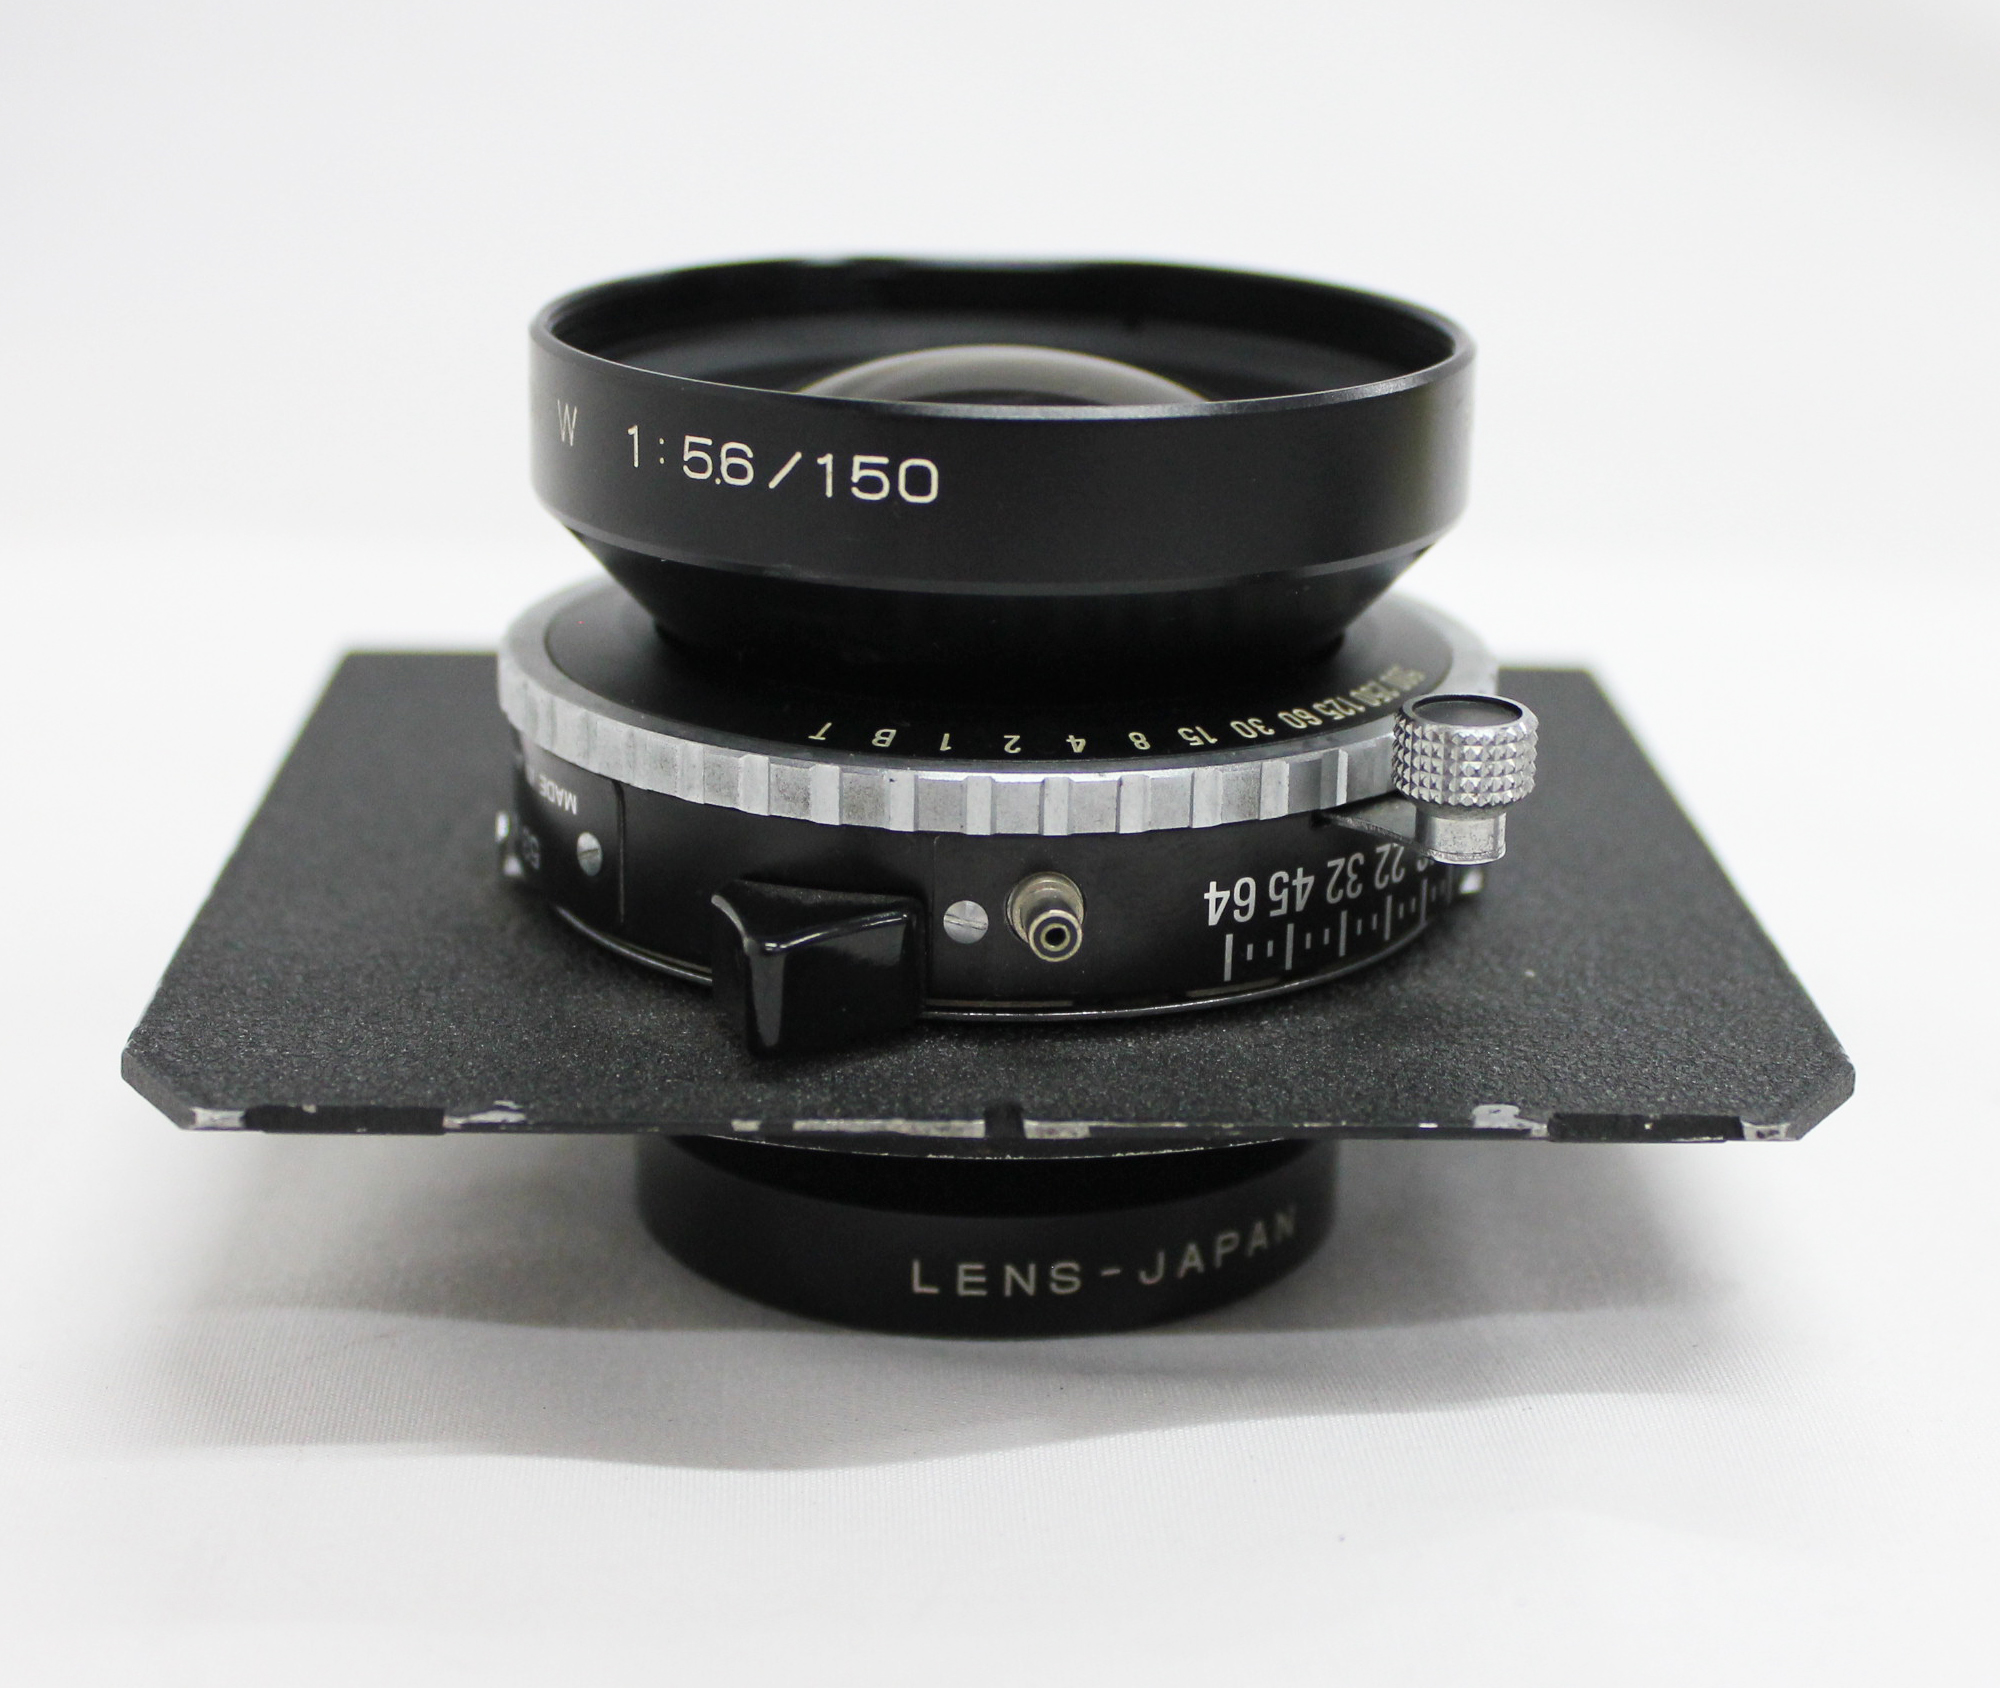 Fuji Fujinon W 150mm F/5.6 4x5 Large Format Lens with Copal 